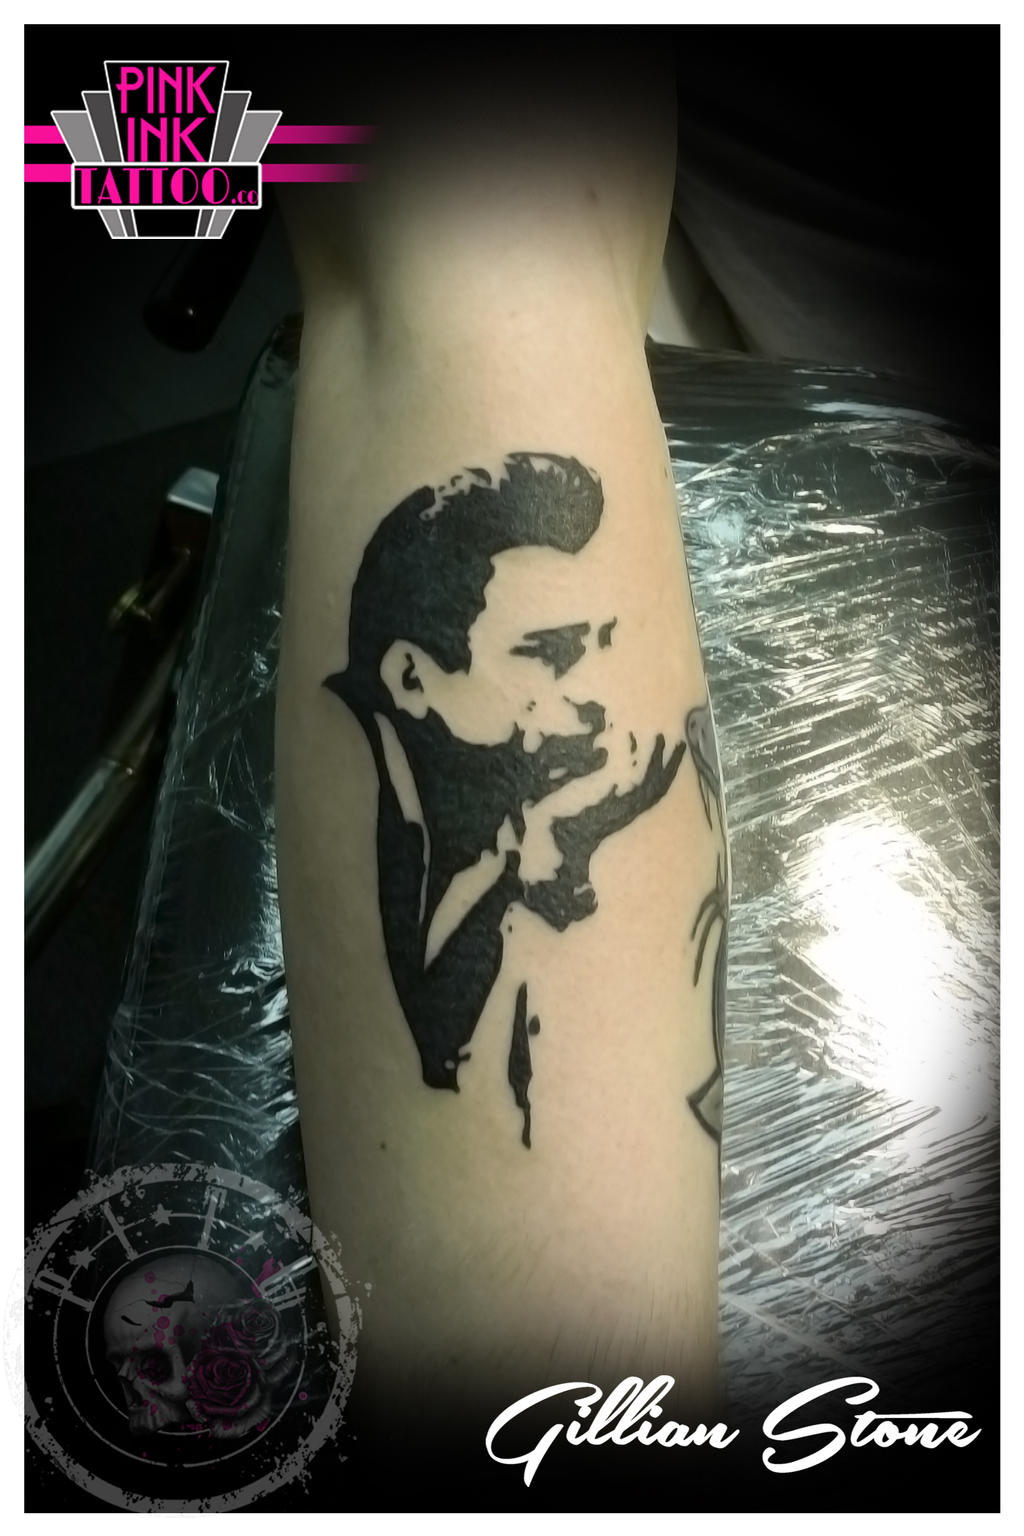 Johnny Cash Tattoo by pinkinktattoostudio on DeviantArt